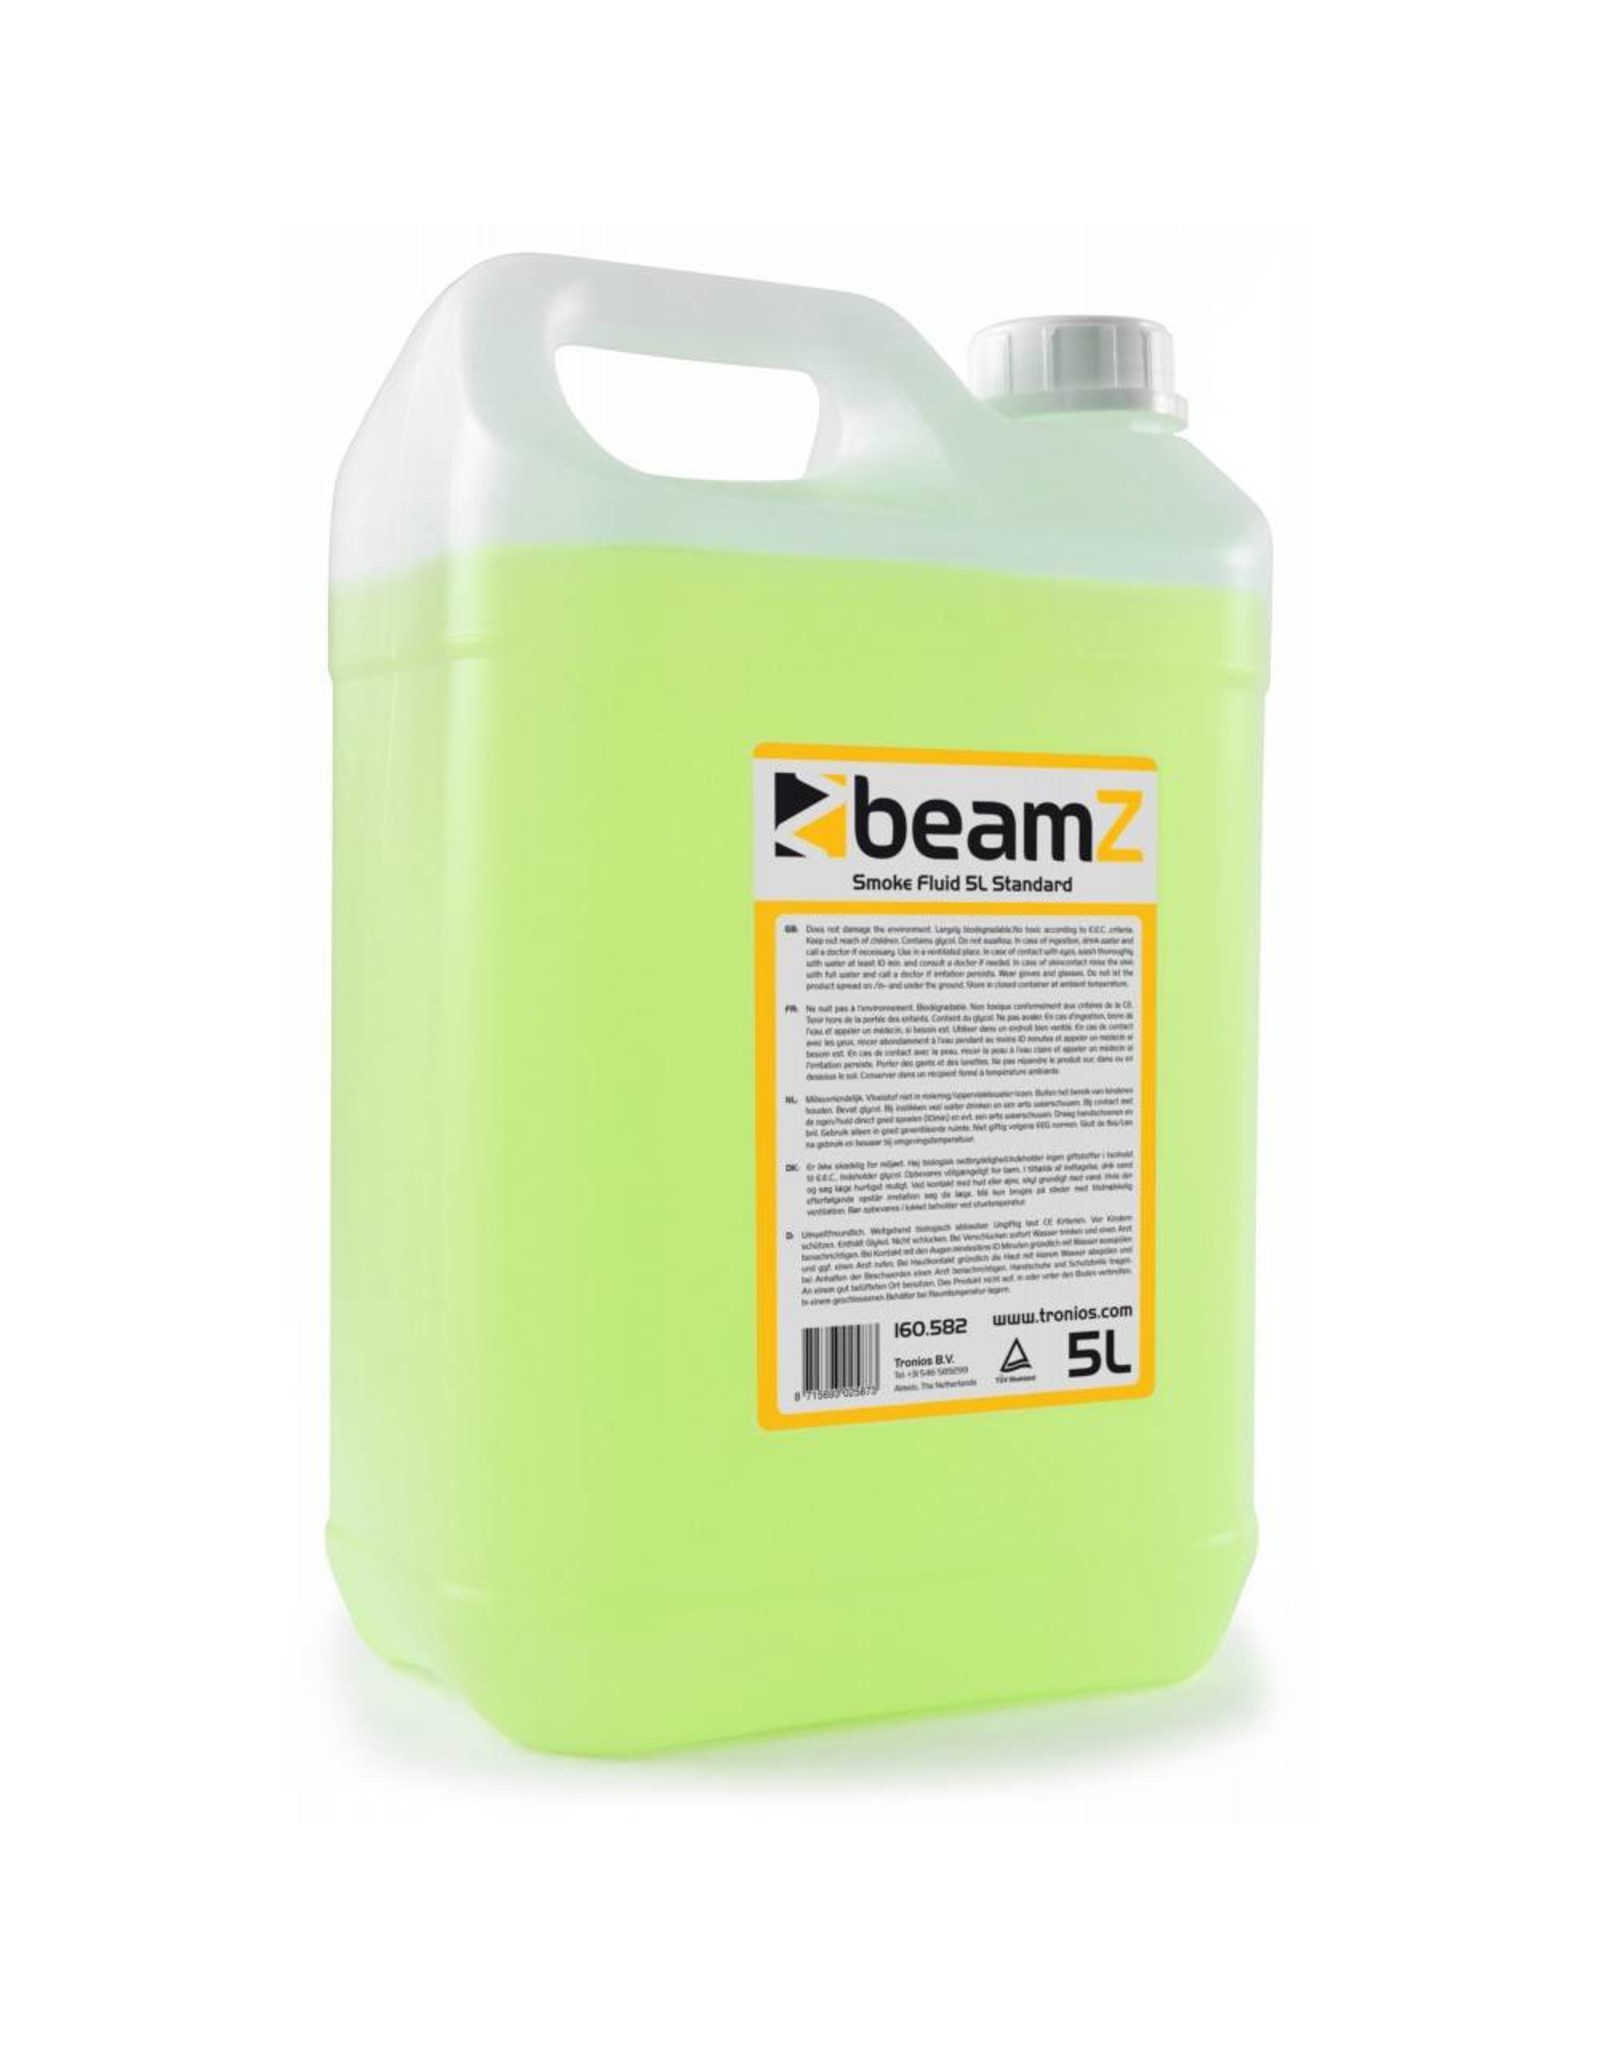 Beamz  Liquid Smoke, Smoke Fluid, Standard - 5L 160 582